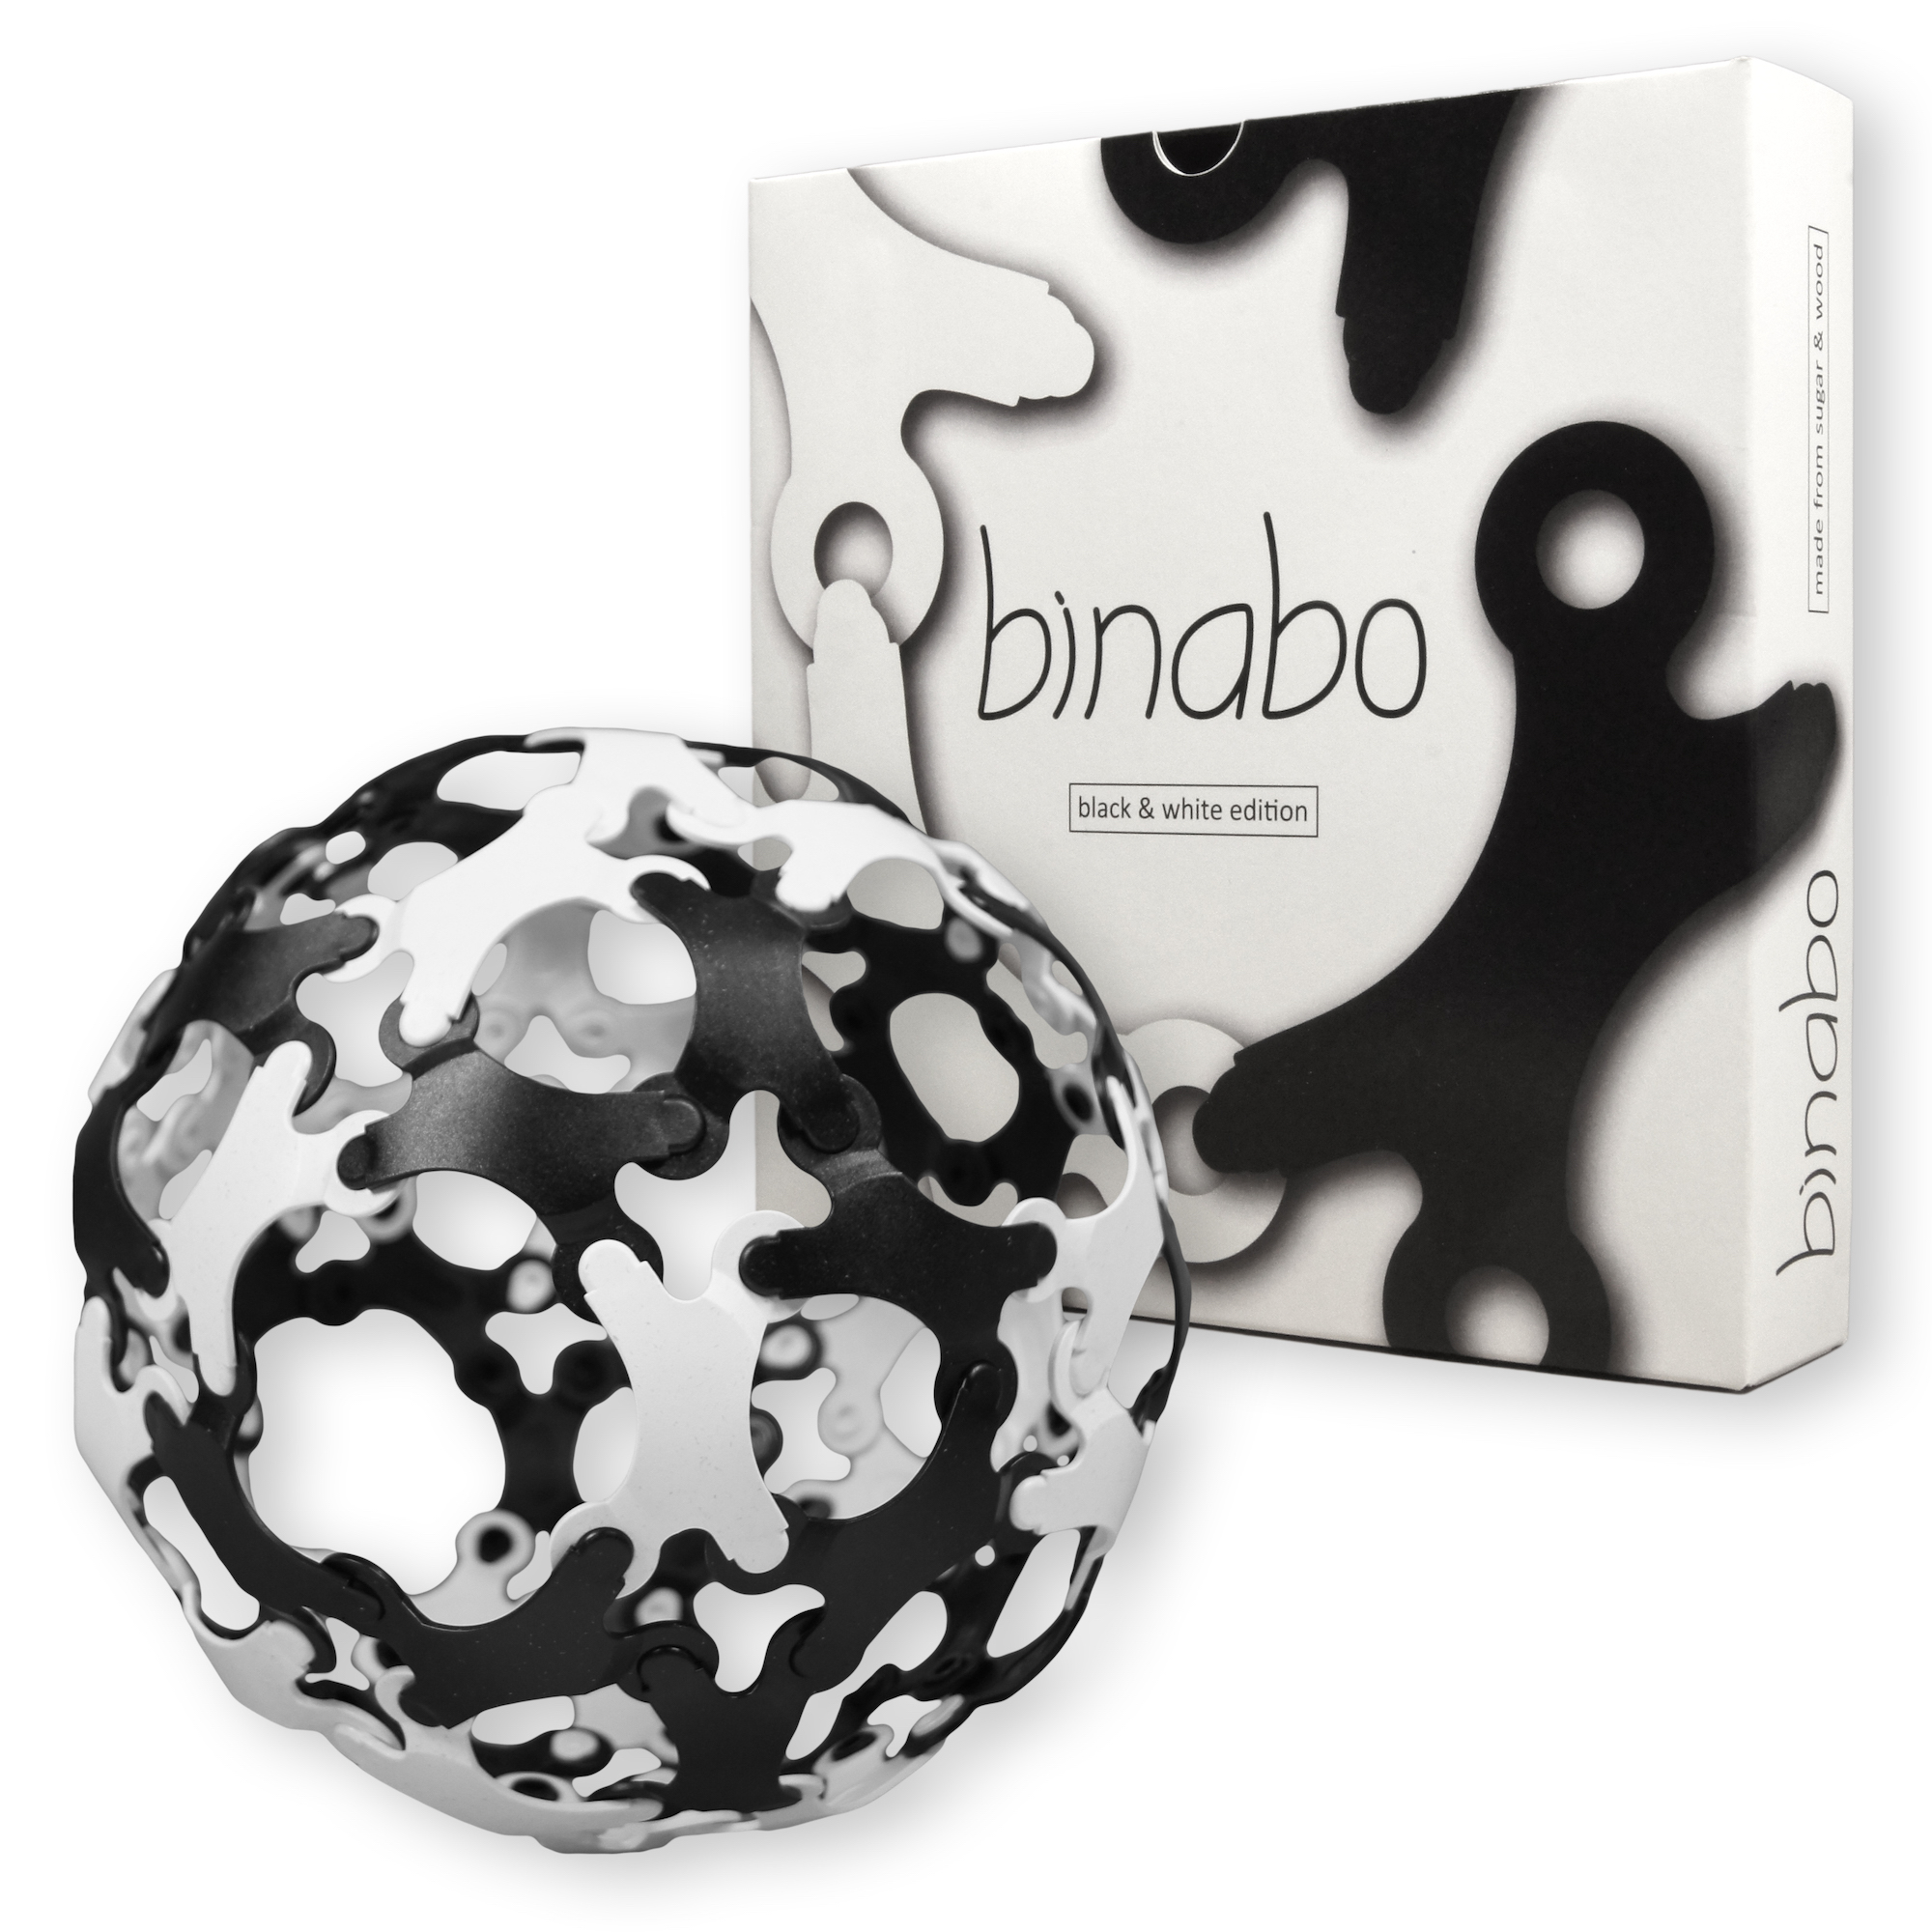 Binabo – 60 Chips – black & white